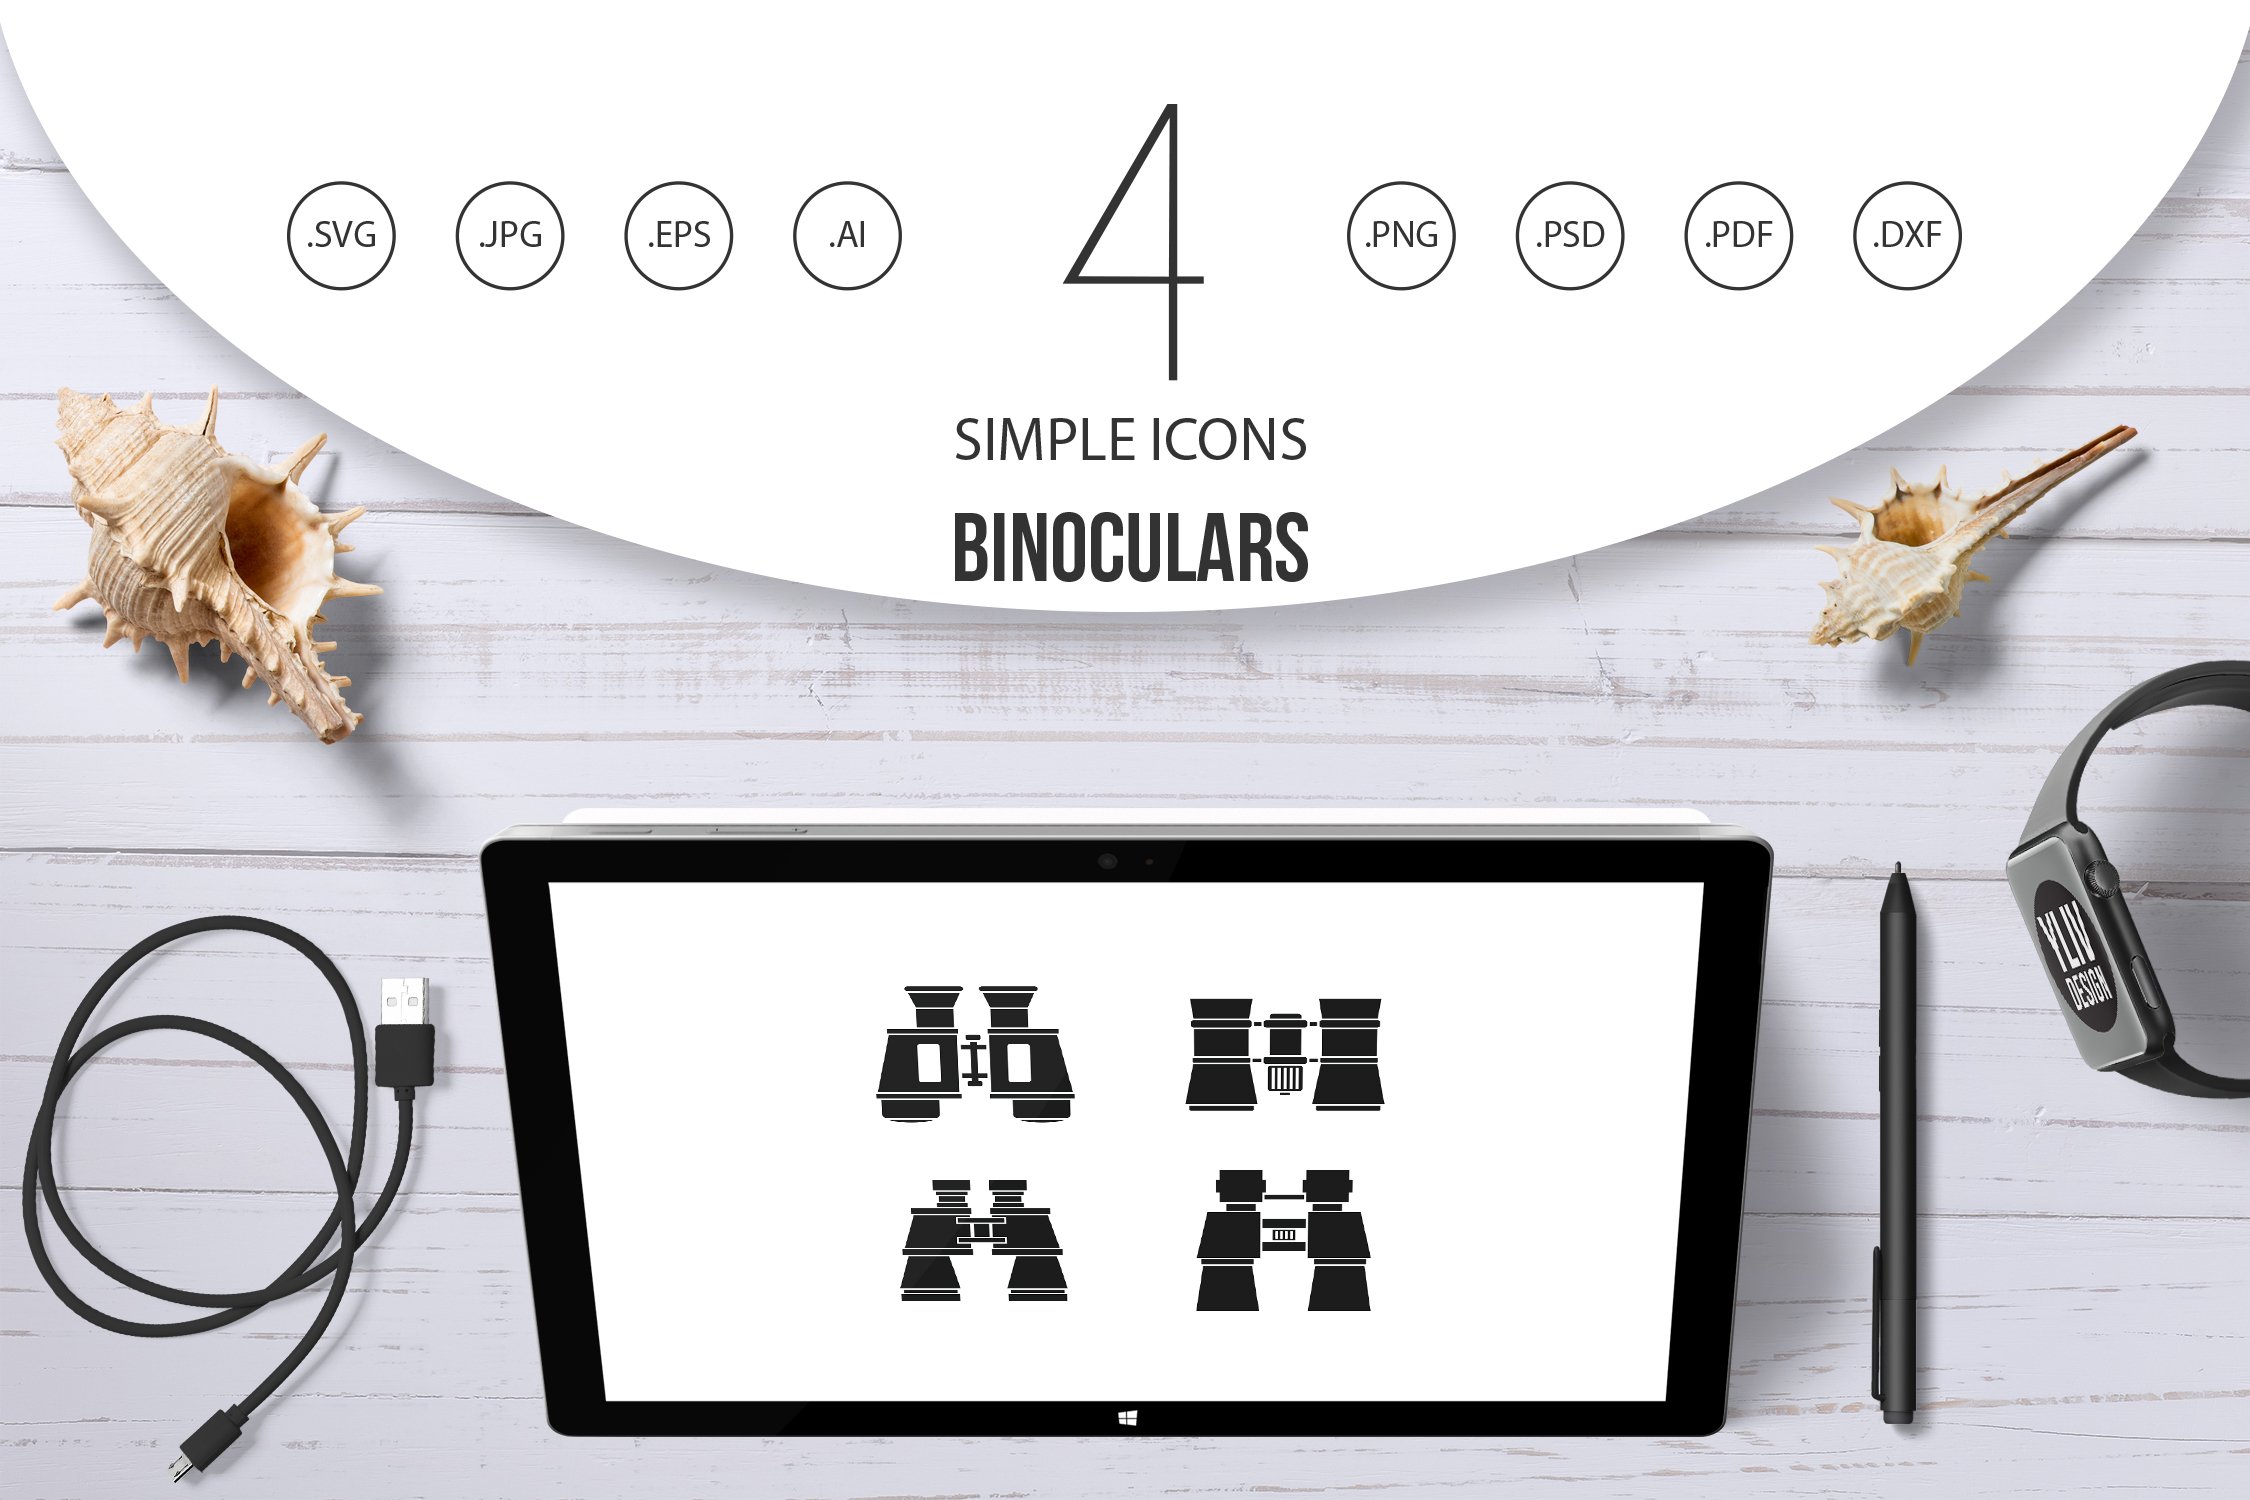 Binoculars icon set, simple style cover image.